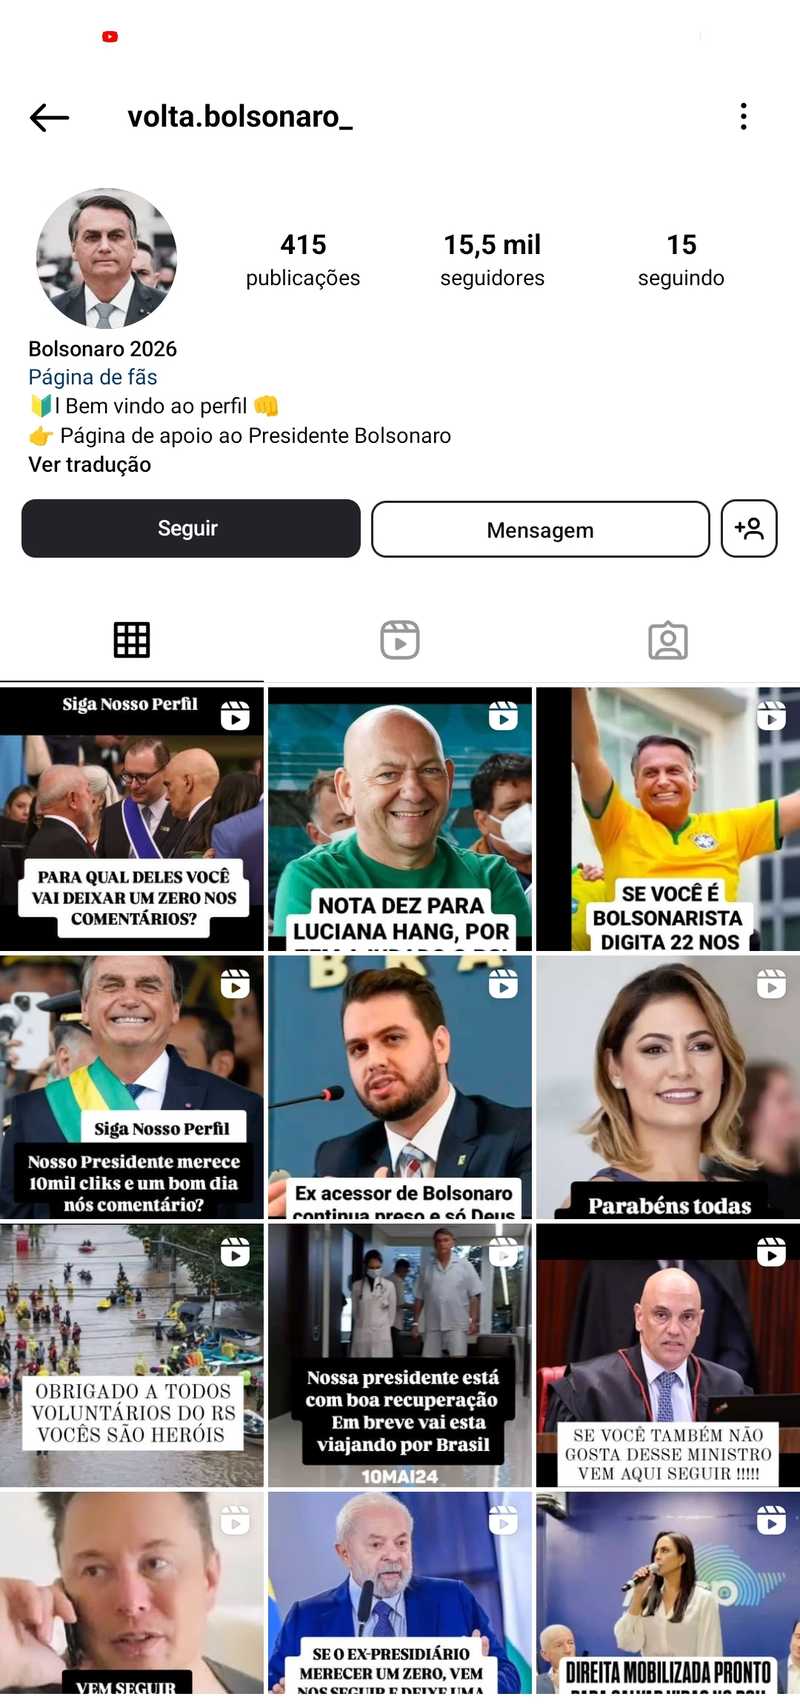 Contas King - Vendas de Contas do Instagram - volta.bolsonaro_